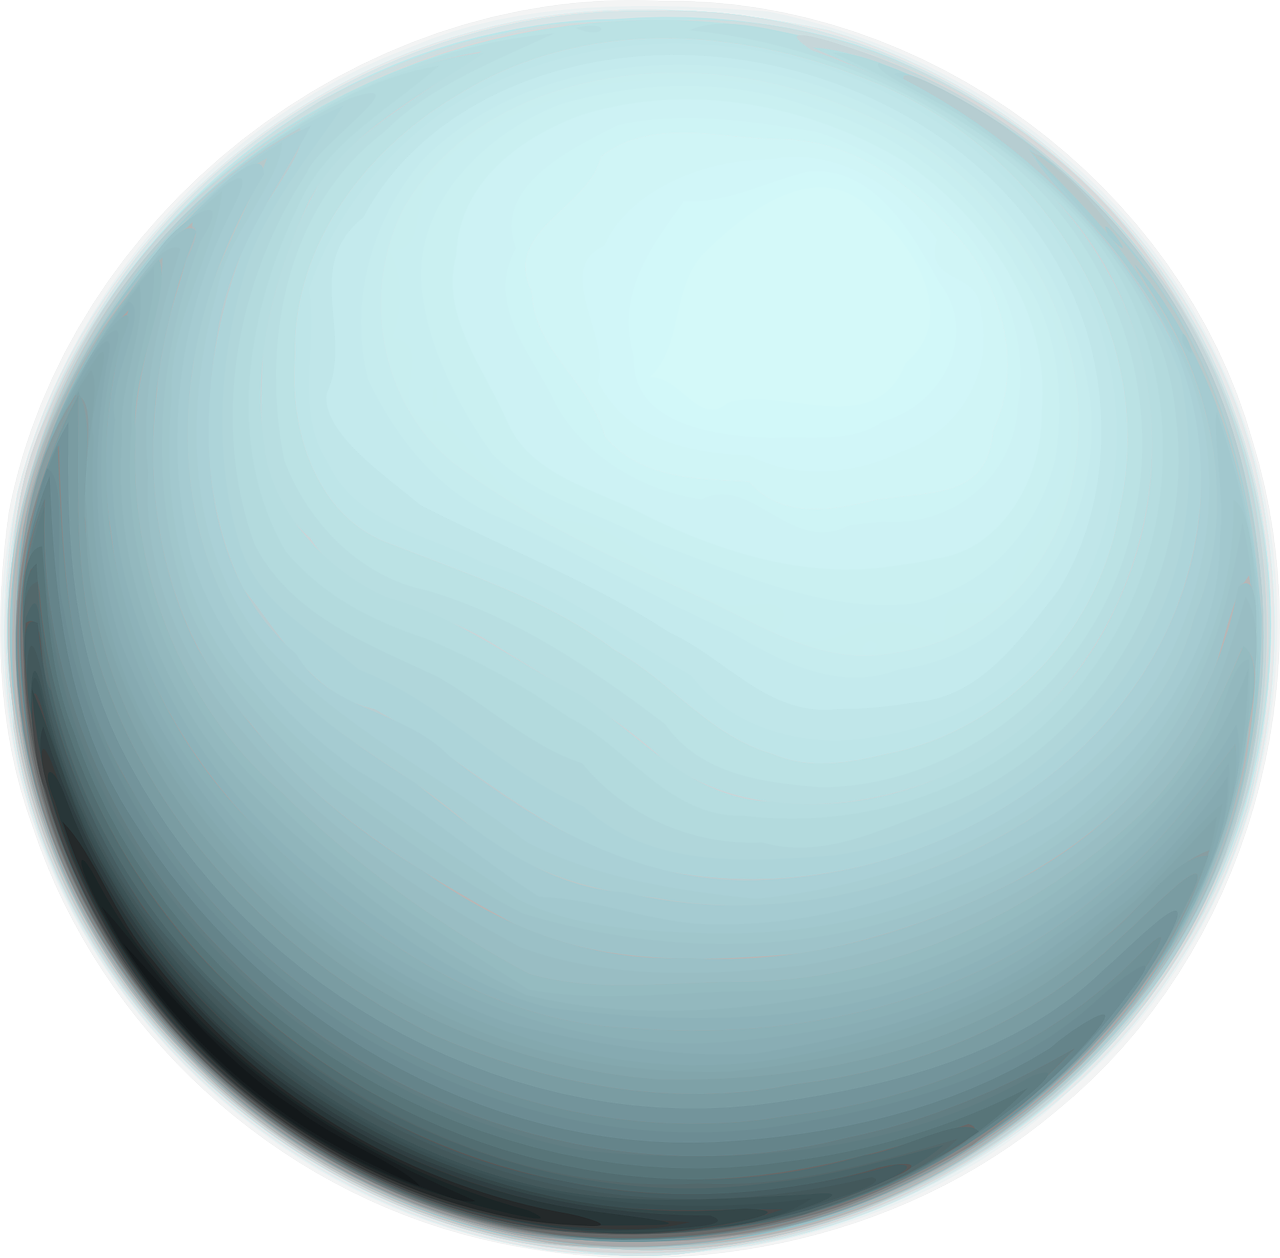 drawing of the planet uranus